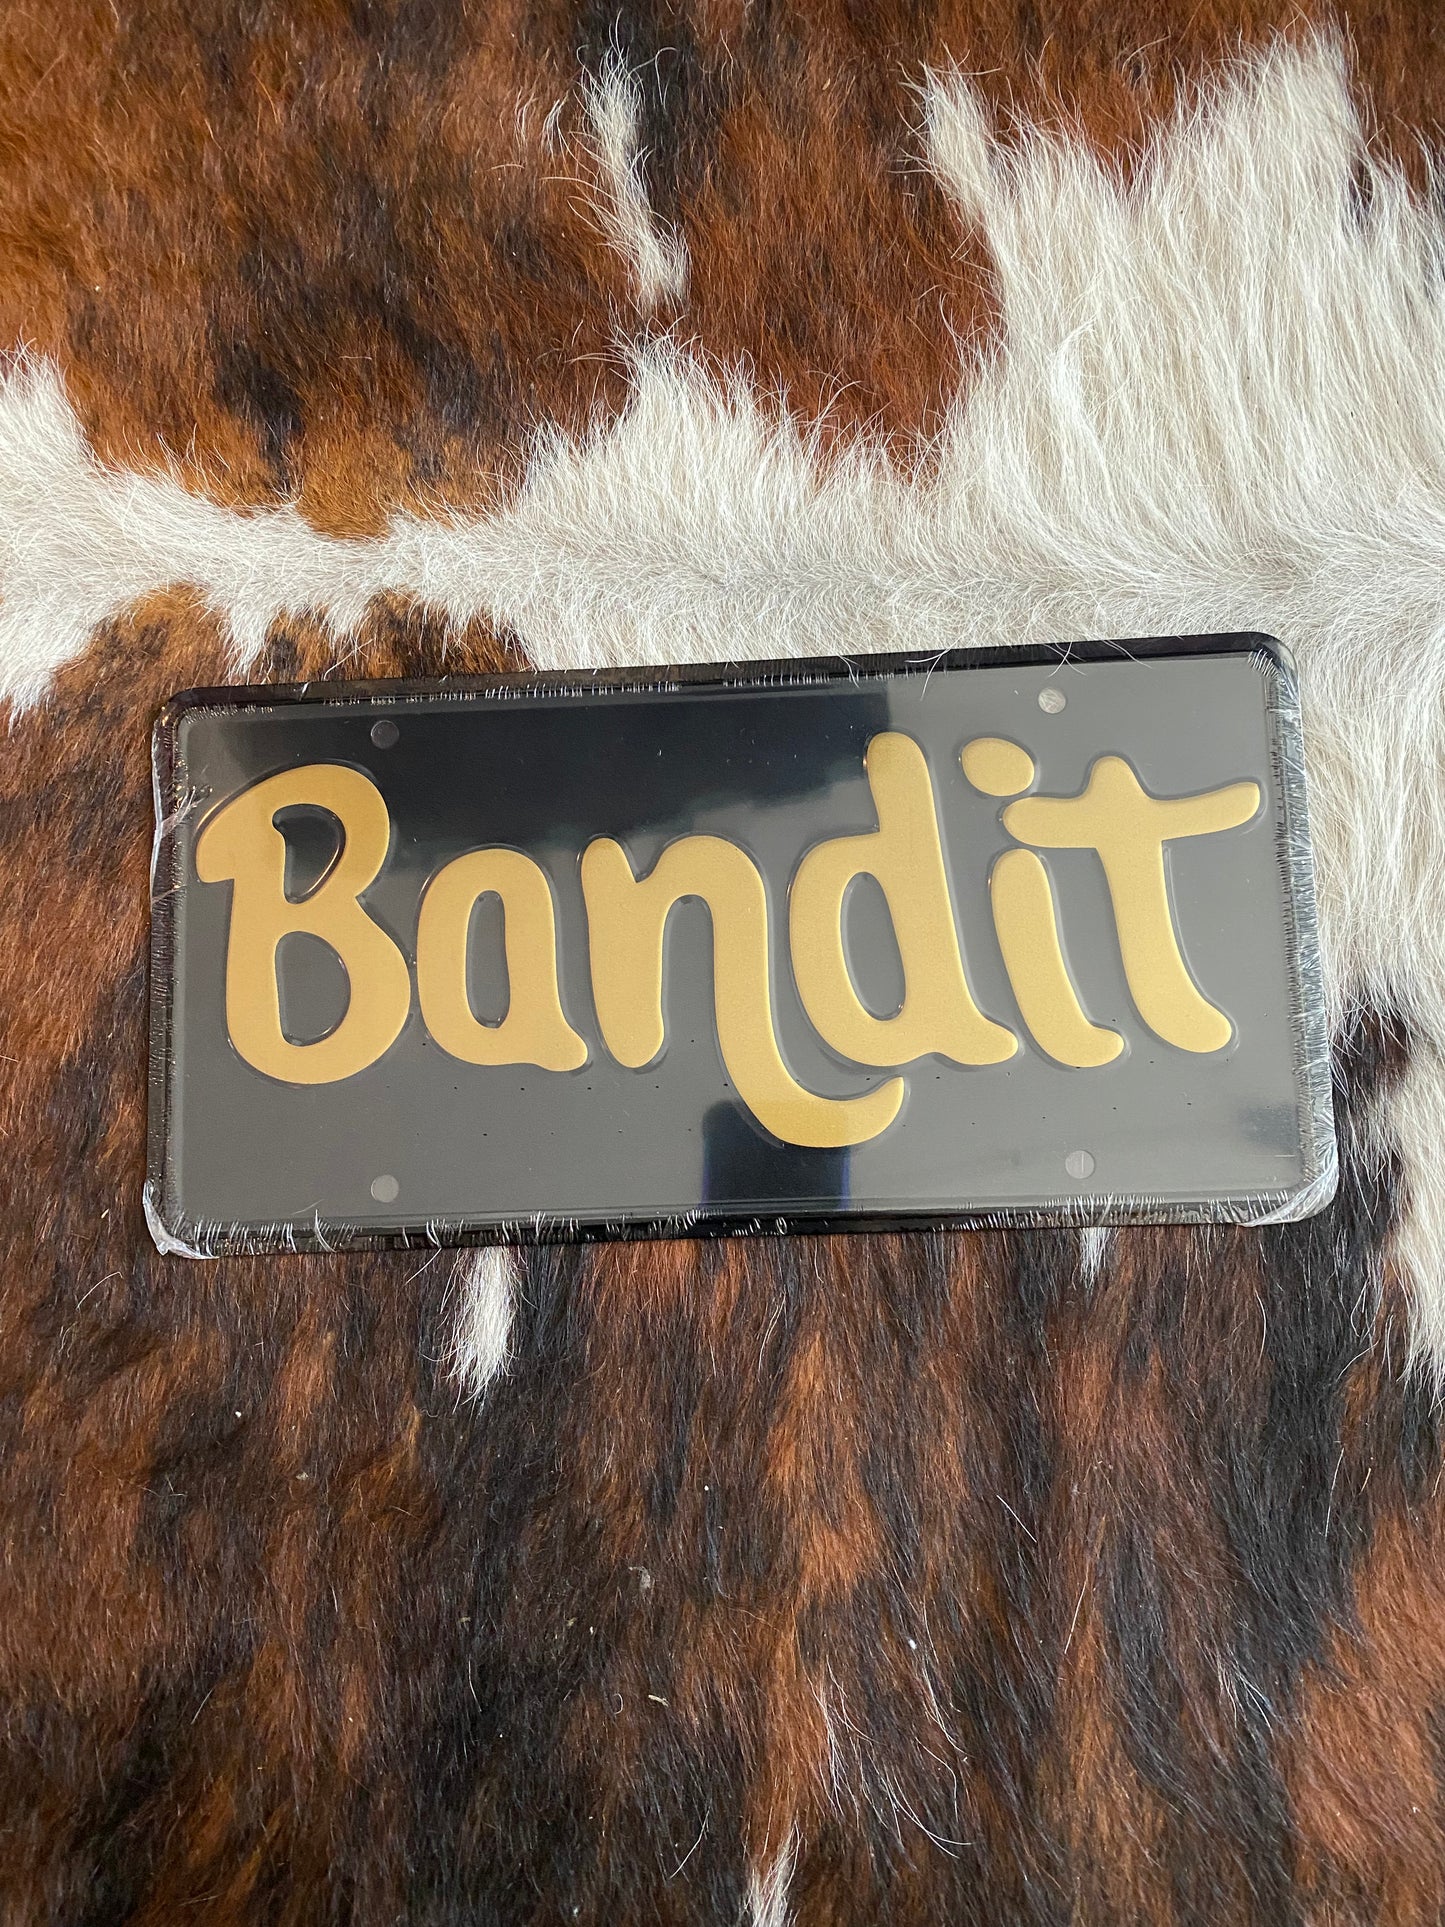 Bandit License Plate